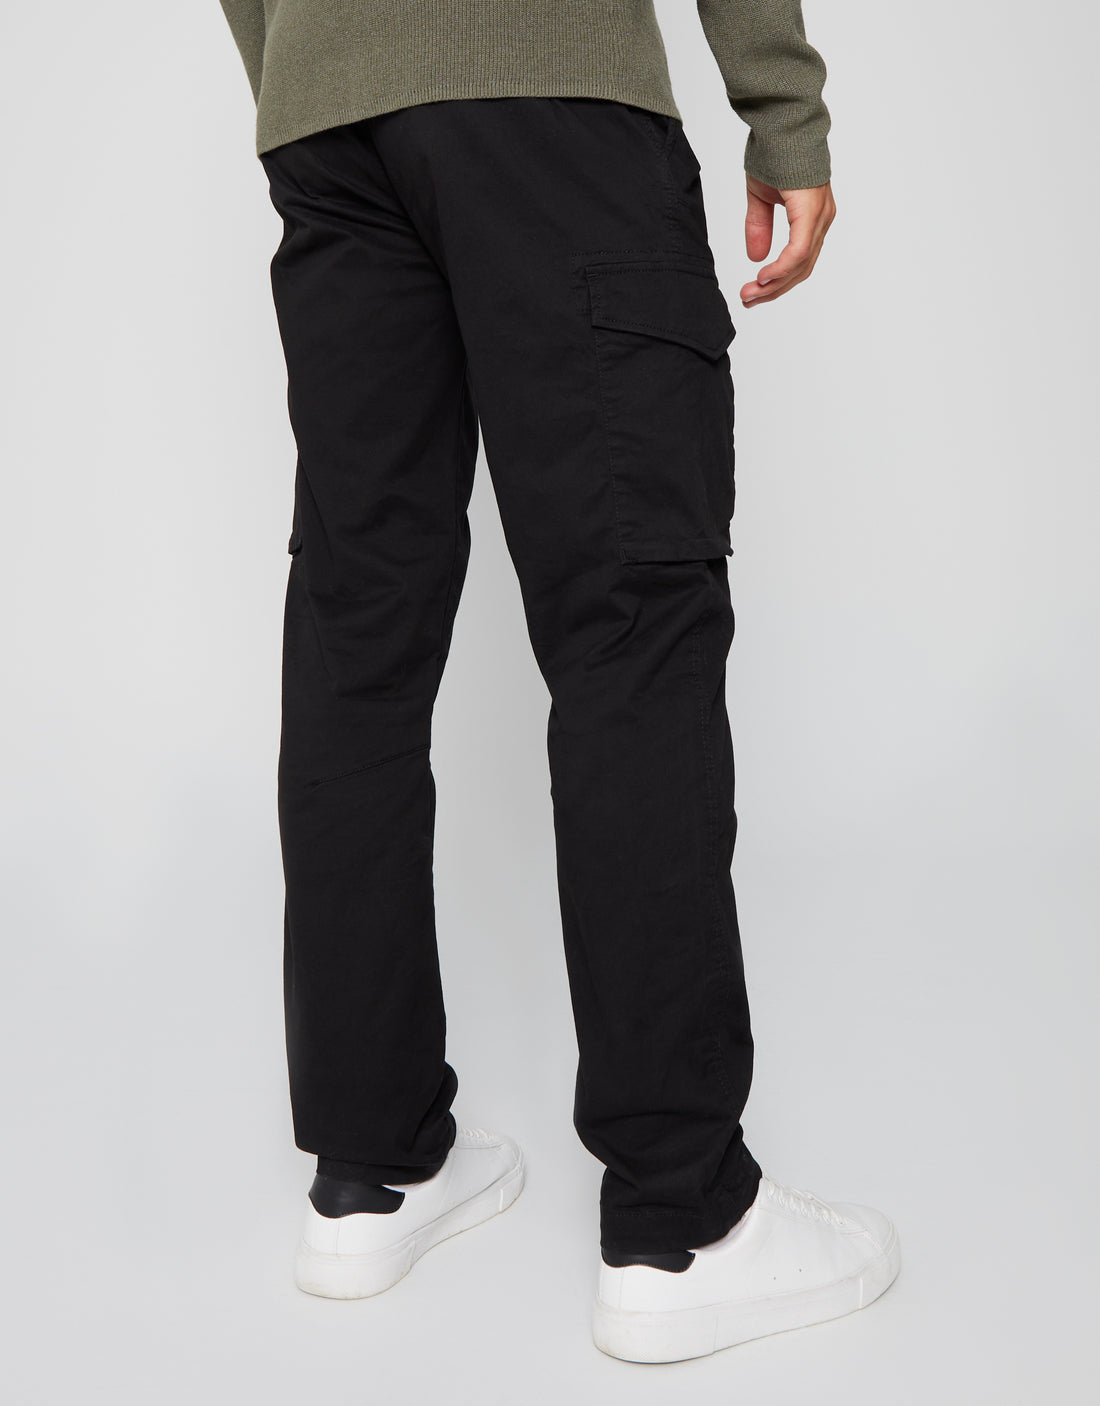 Men's Black Cargo Style Casual Trouser – Threadbare